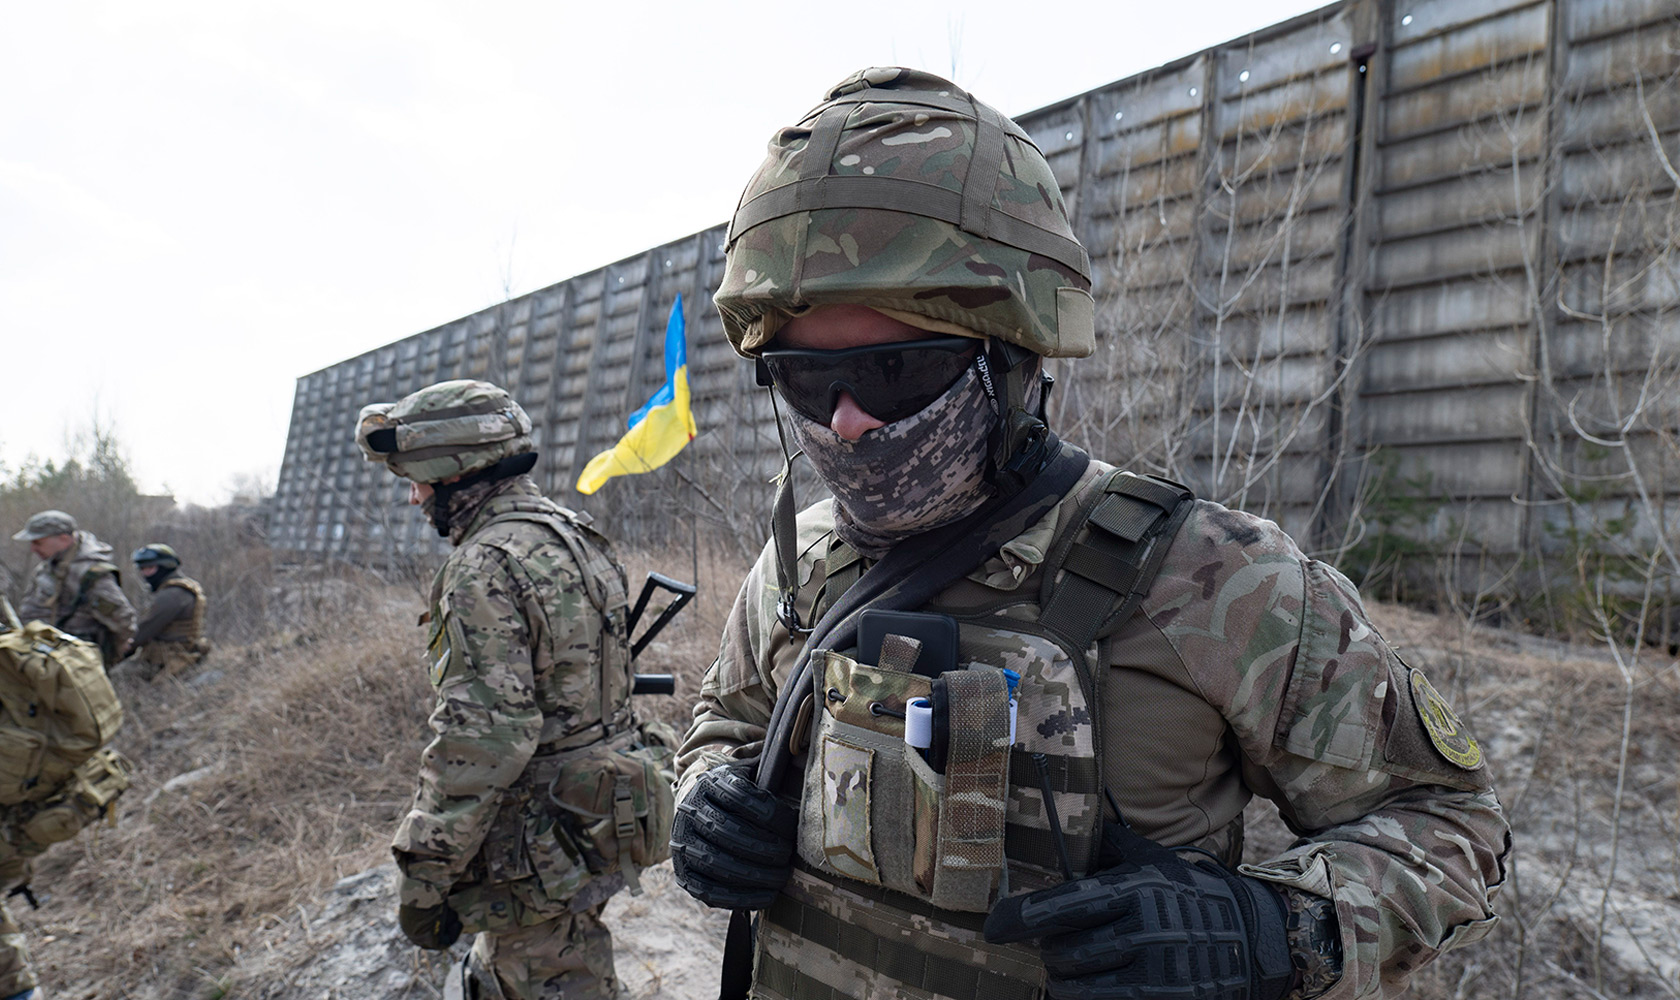 Ukraine’s Territorial Defense volunteers prepare to support army in case of Russian invasion